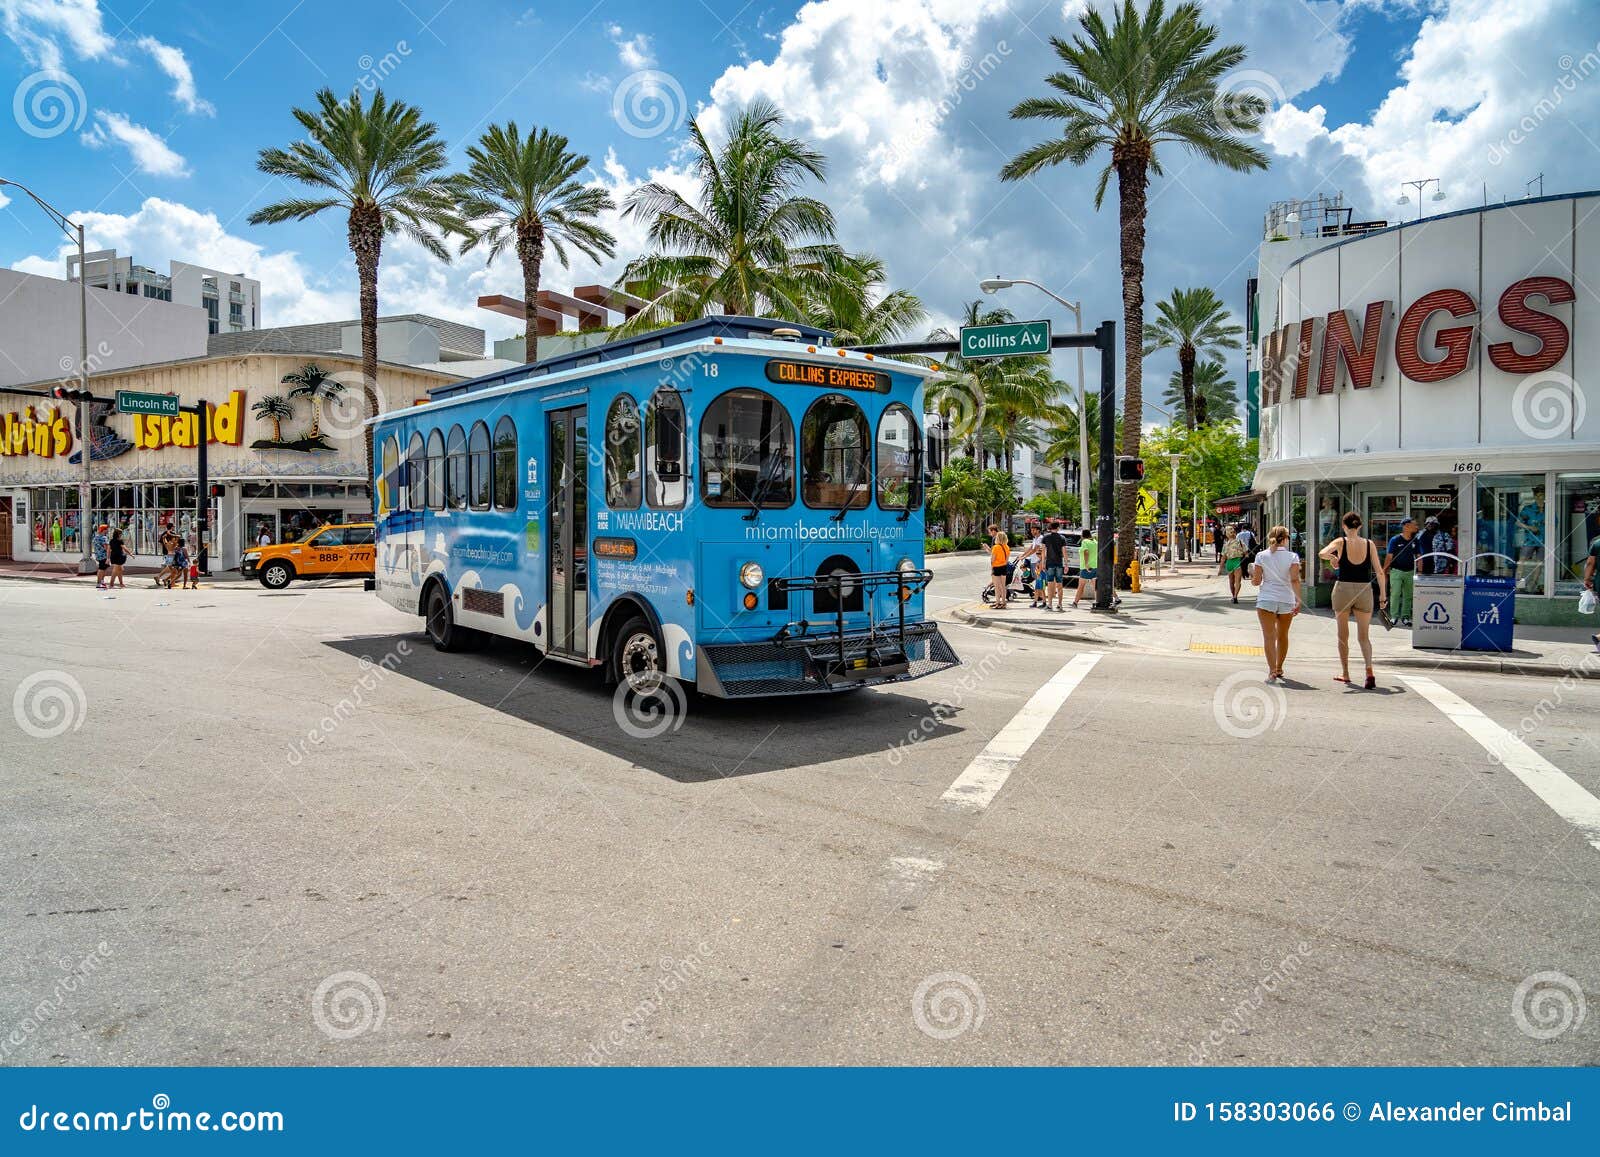 miami beach, florida, usa - free public trolley bus